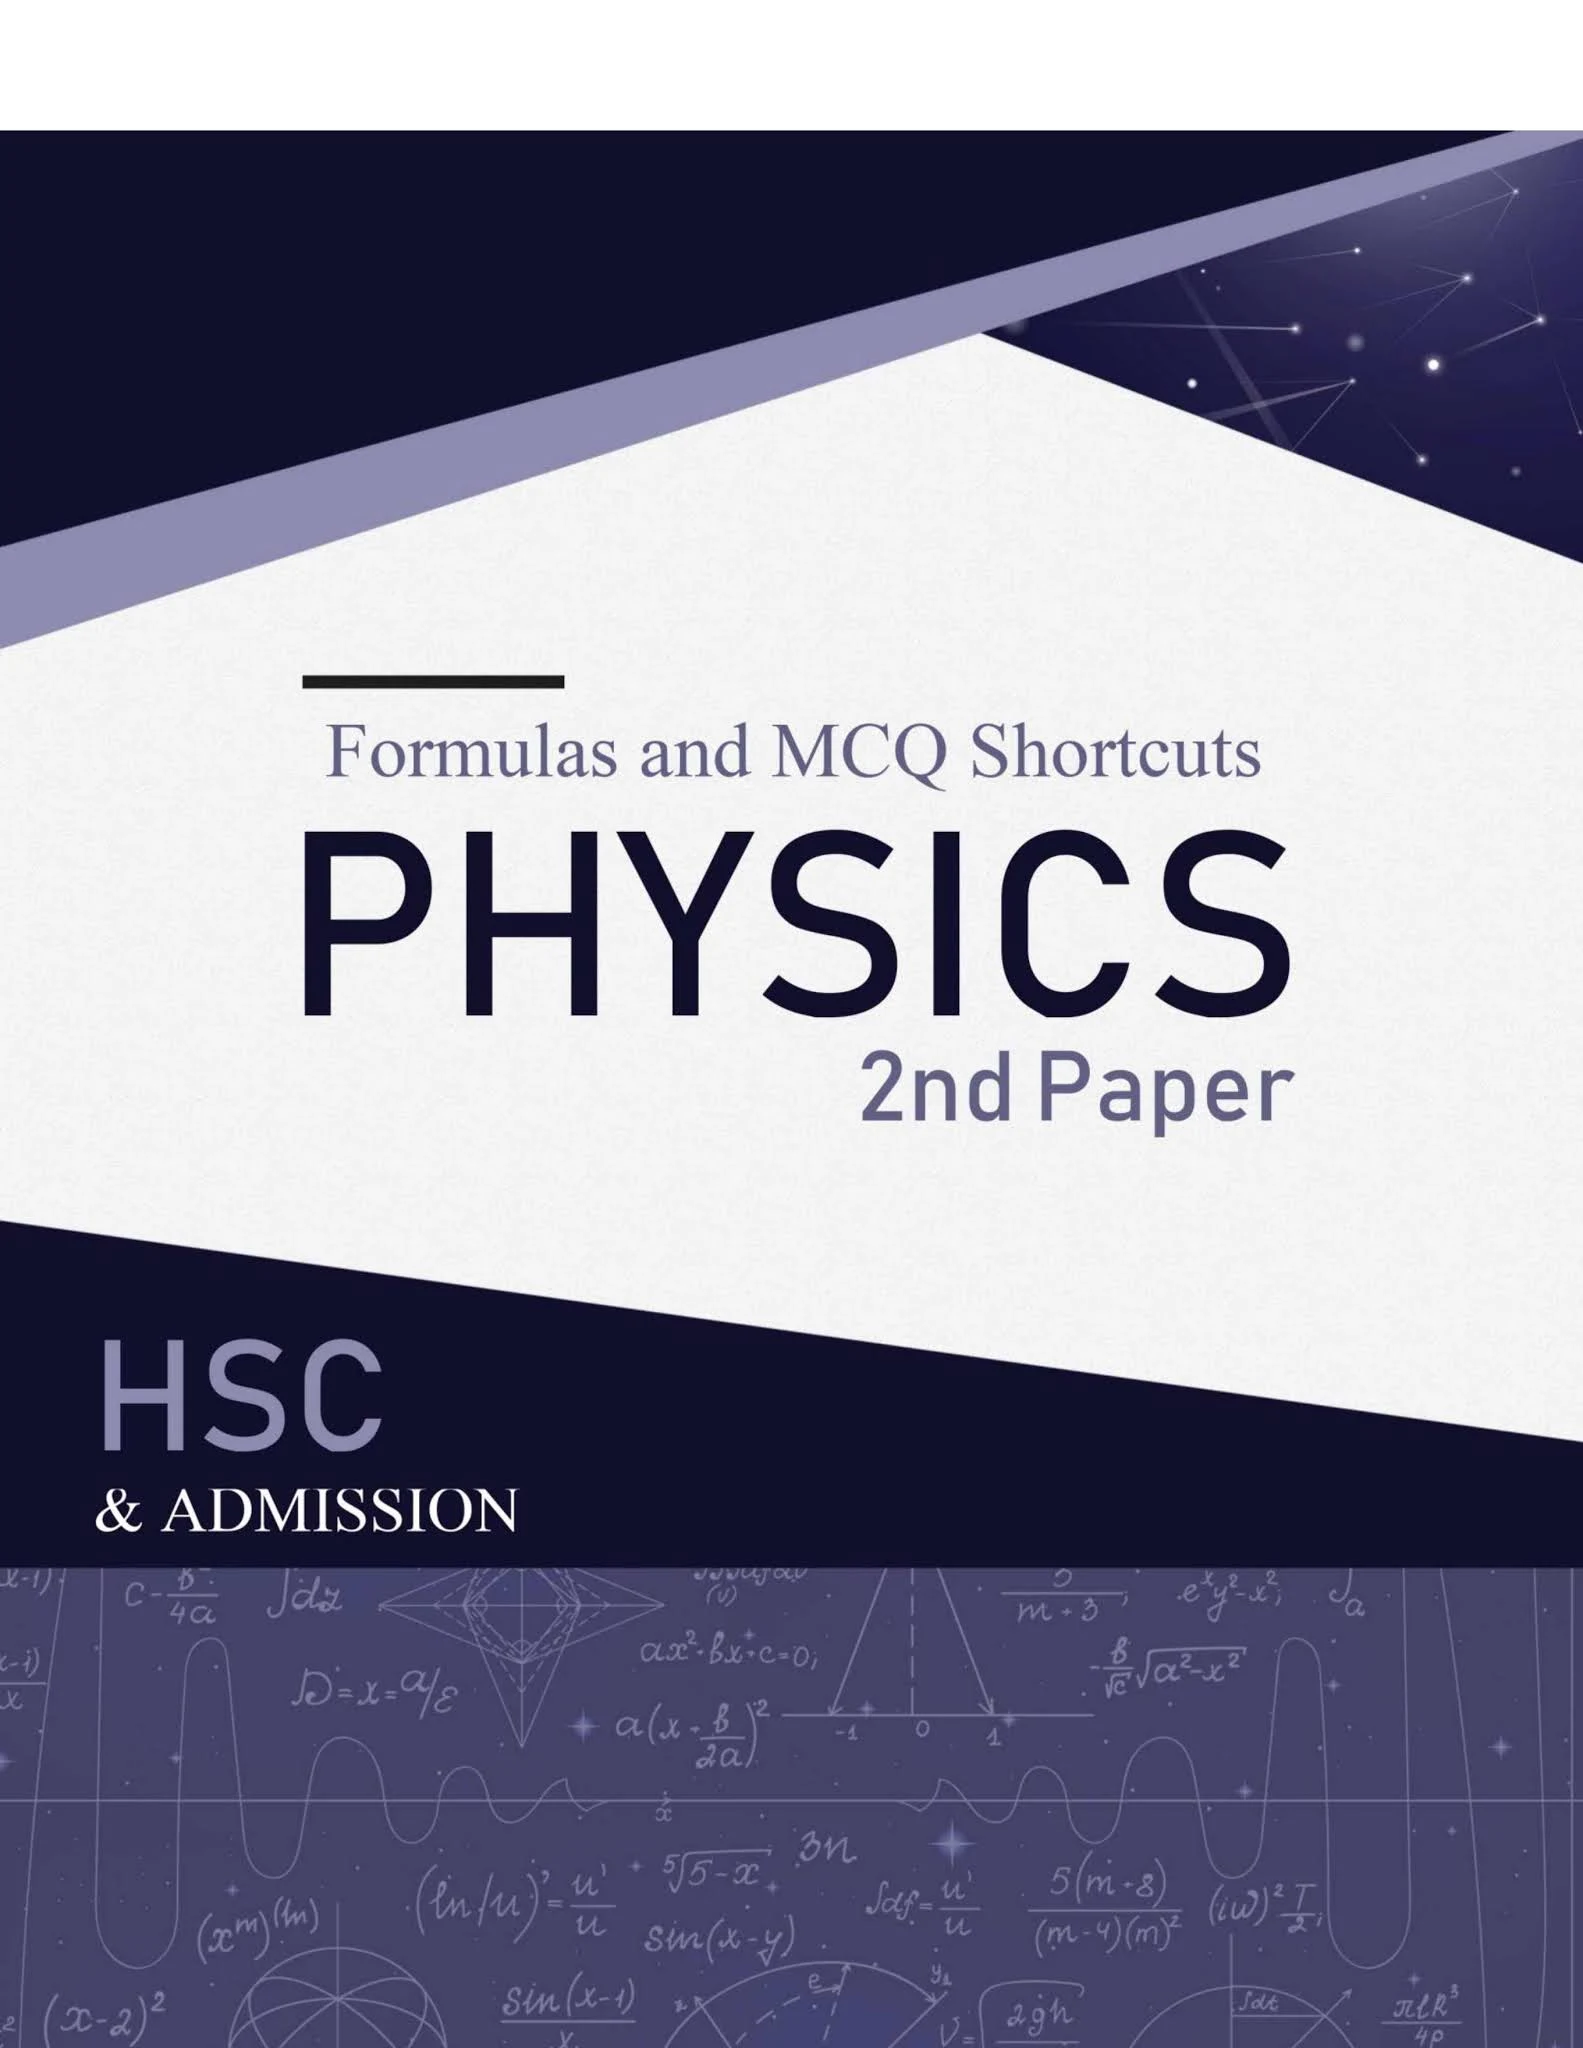 Hsc Physics 2nd Paper Formula Pdf Download  | পদার্থ বিজ্ঞান ২য় পত্র সকল সূত্র PDF